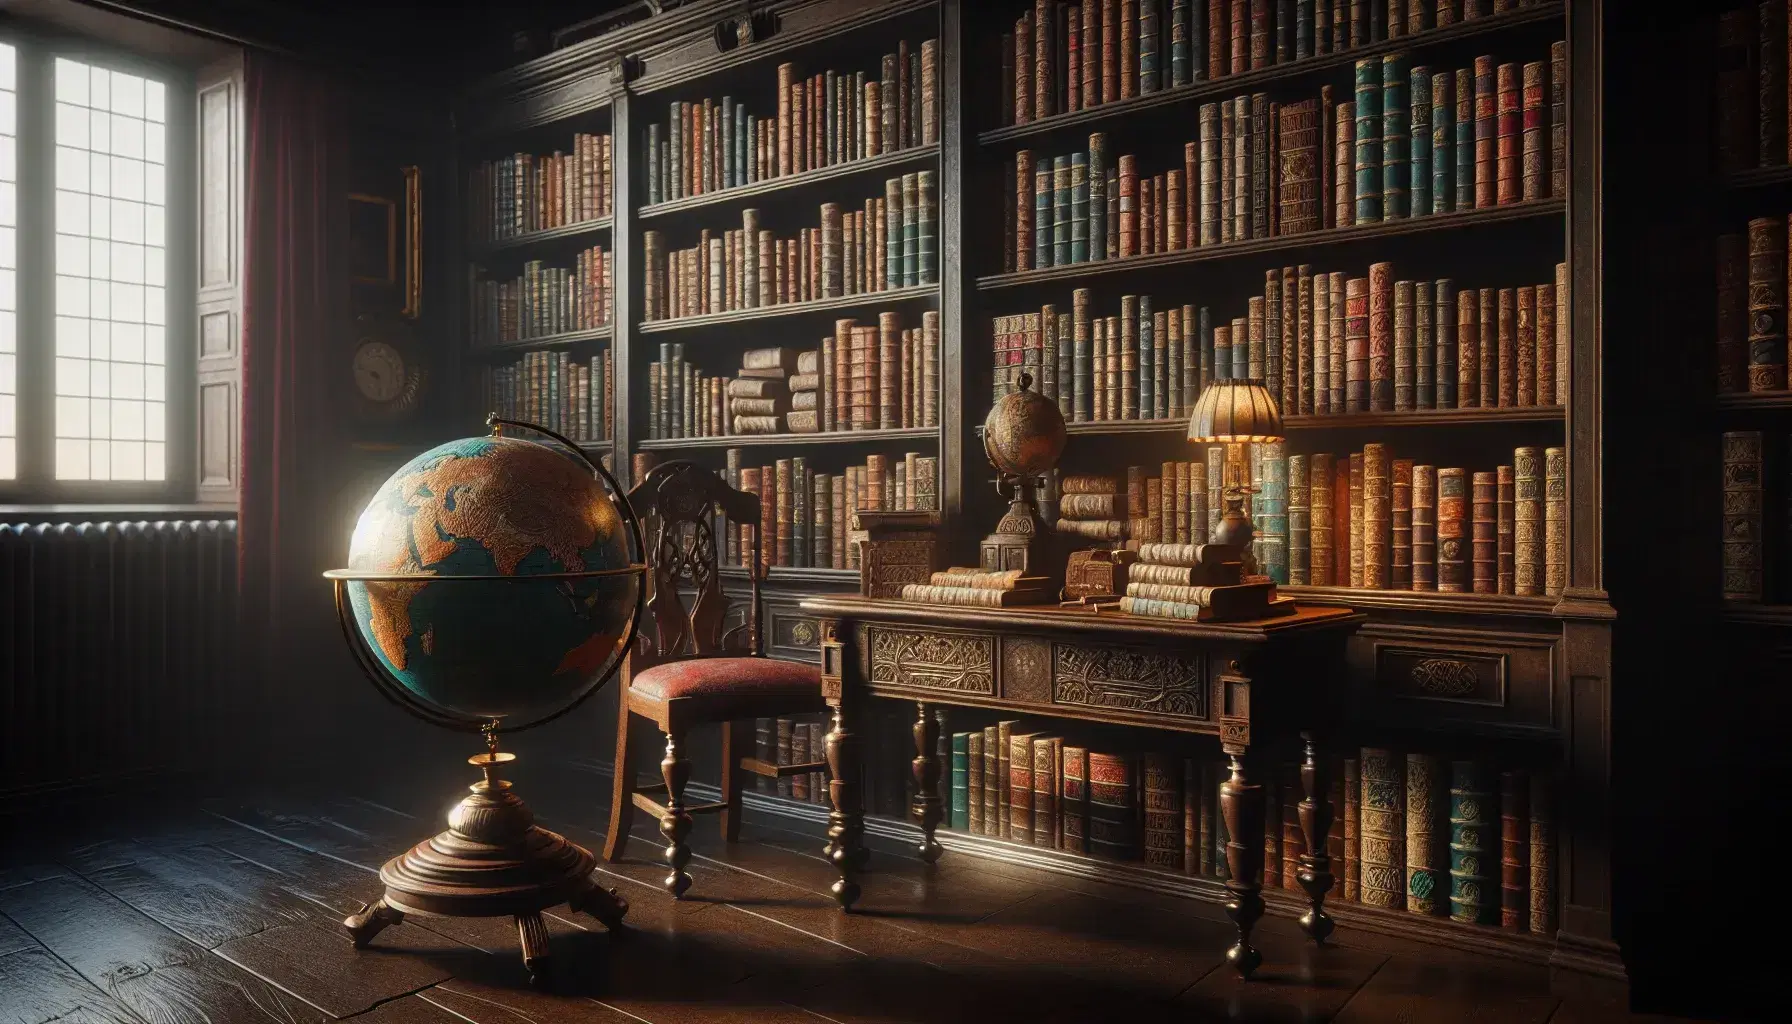 Biblioteca antigua con estantes de madera oscuros llenos de libros, mesa central con globo terráqueo y silla con cojín rojo, iluminada por lámpara de pie.